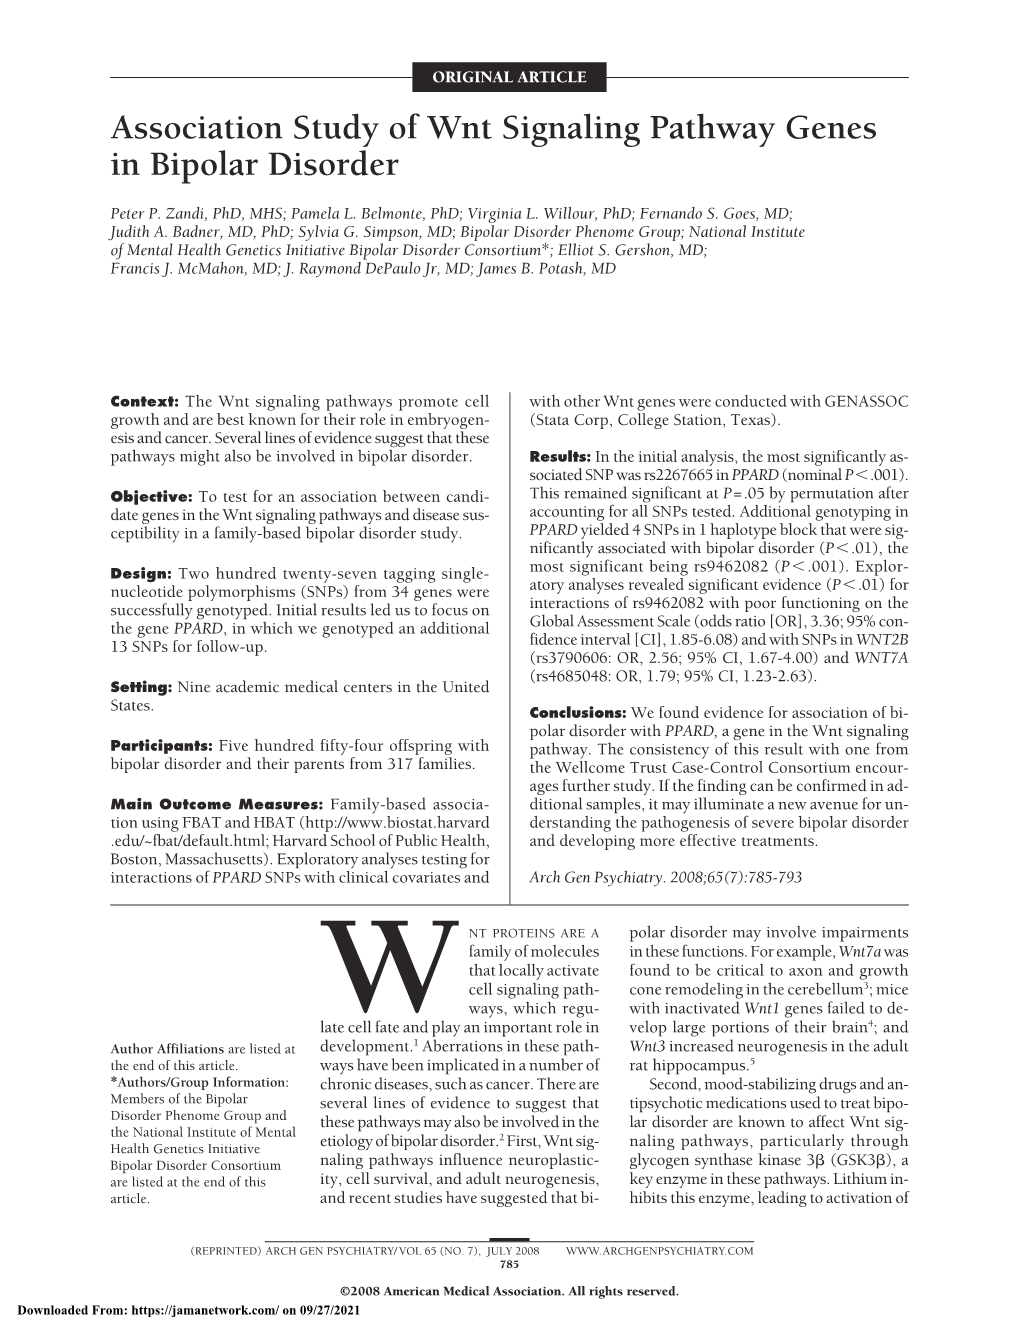 Association Study of Wnt Signaling Pathway Genes in Bipolar Disorder